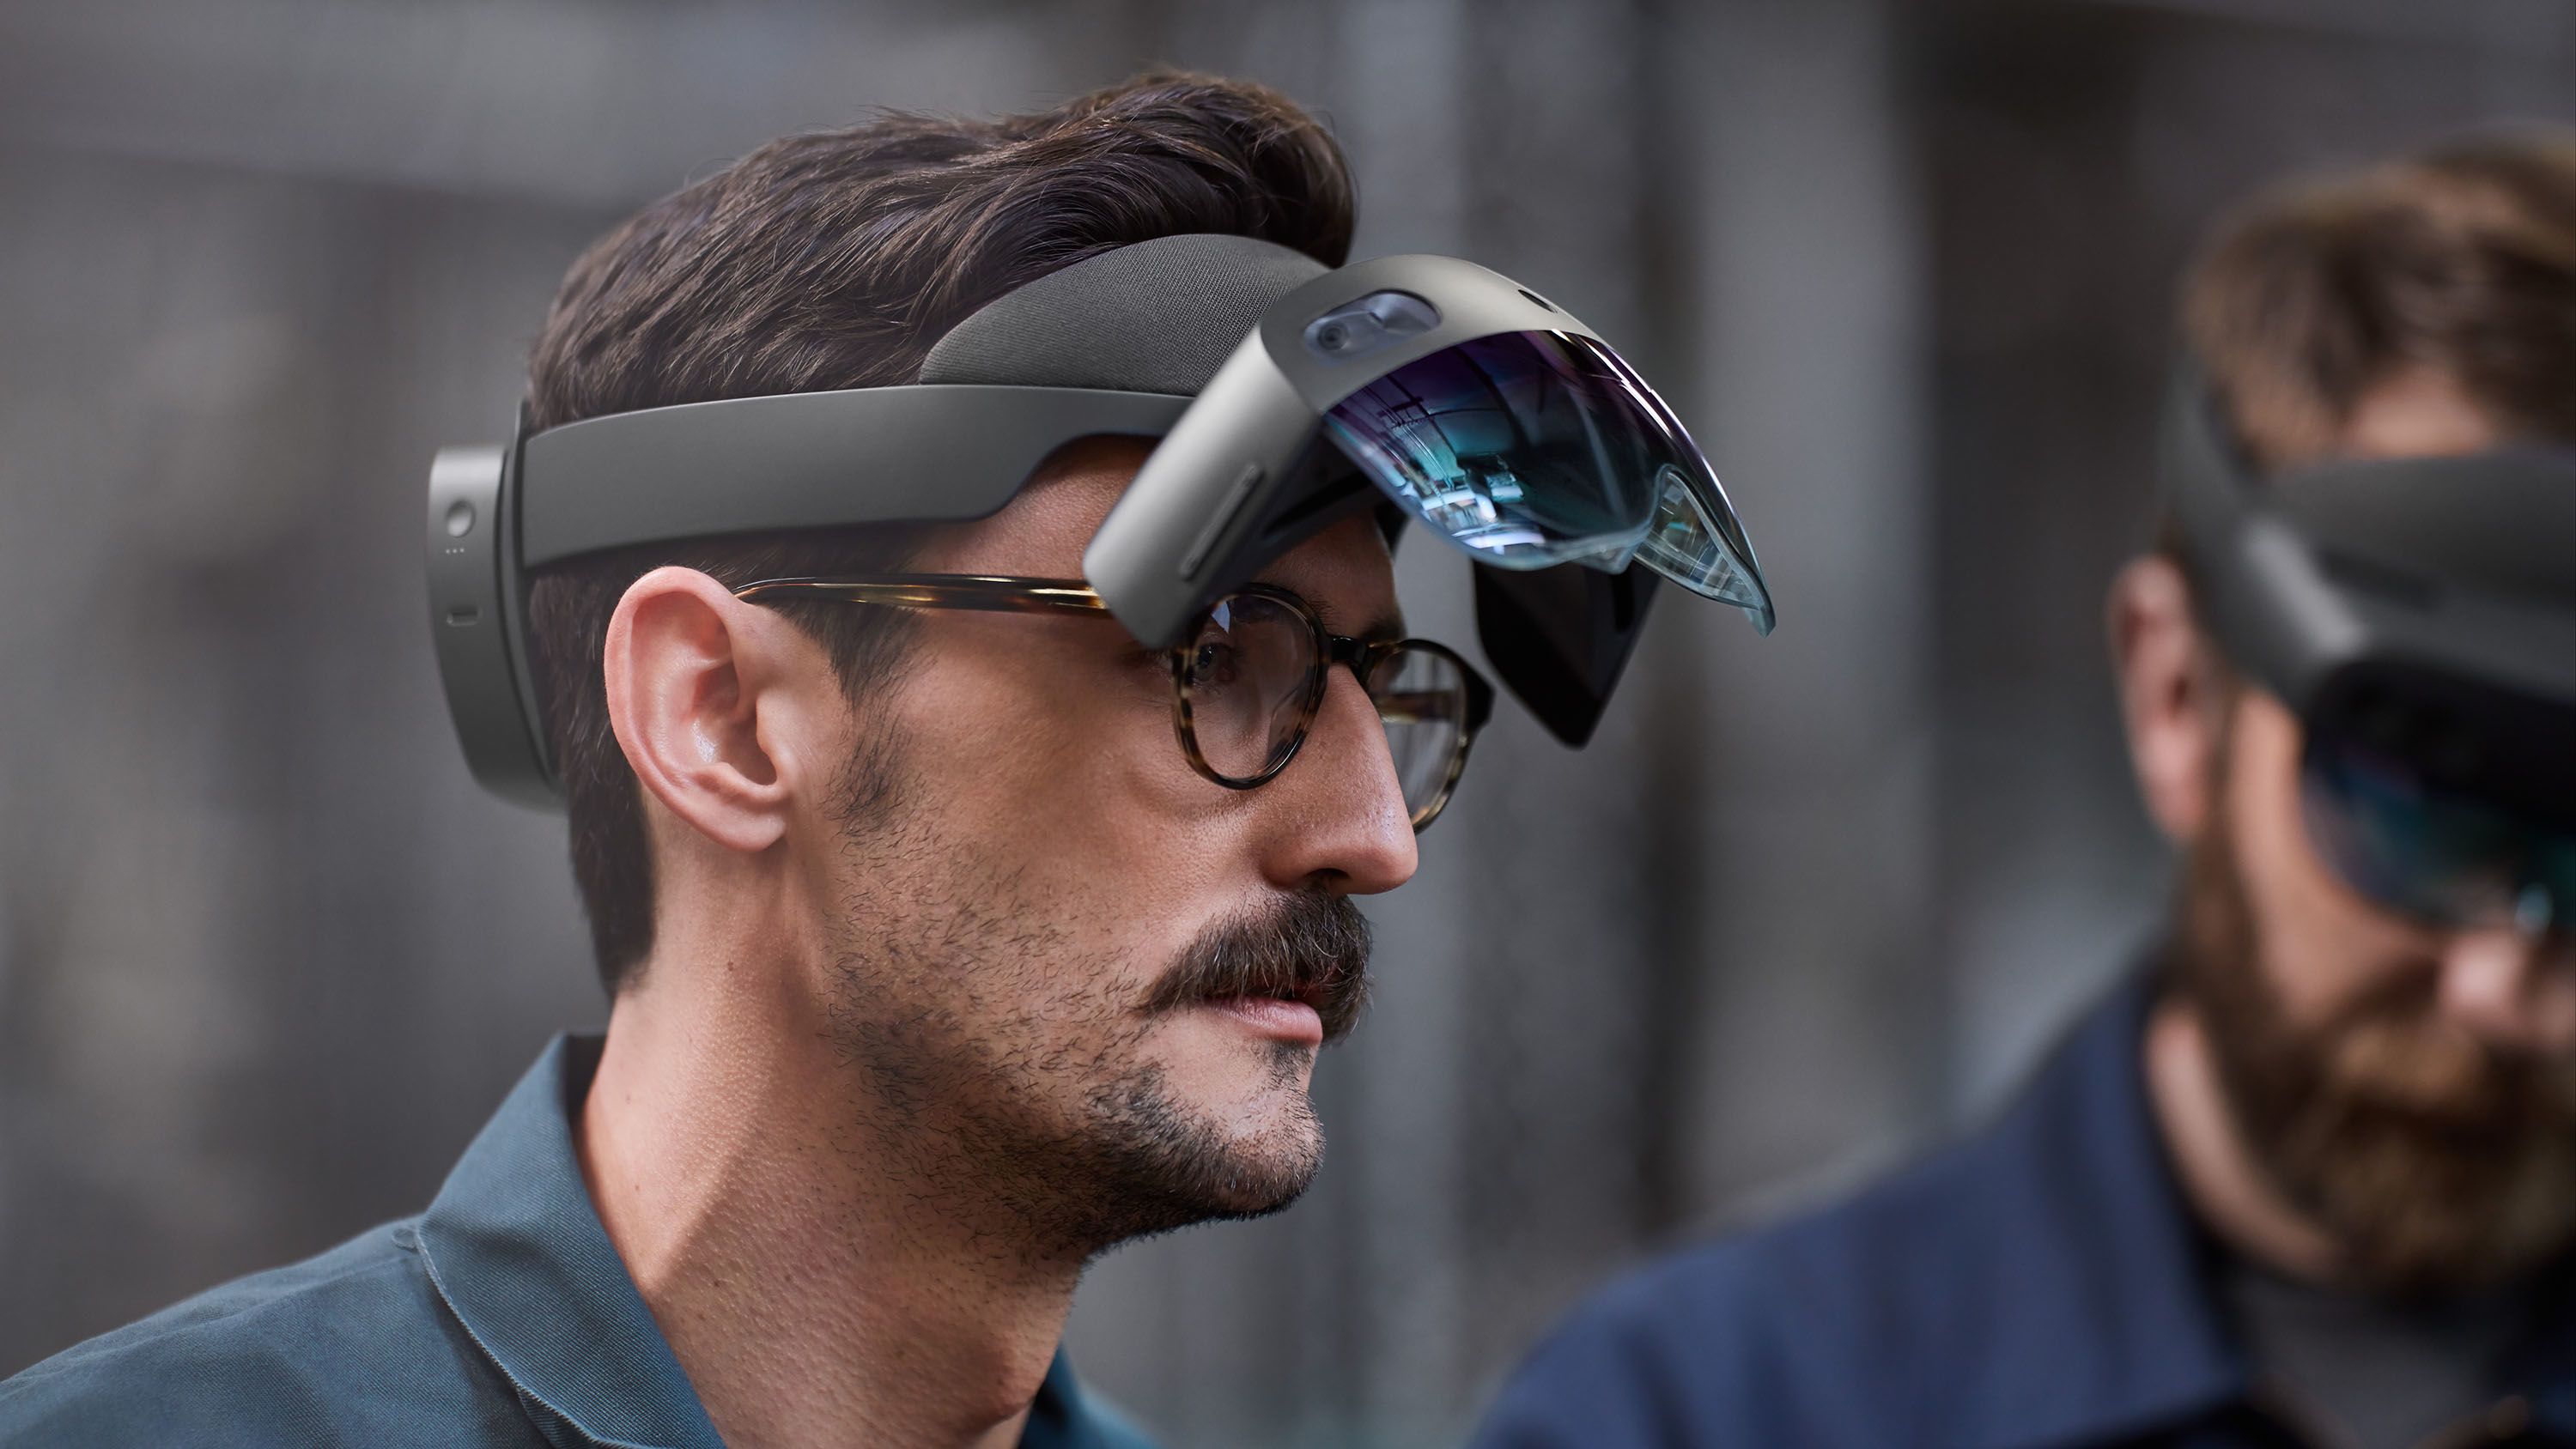 Microsoft's $3,500 HoloLens 2 headset means business | CNN Business